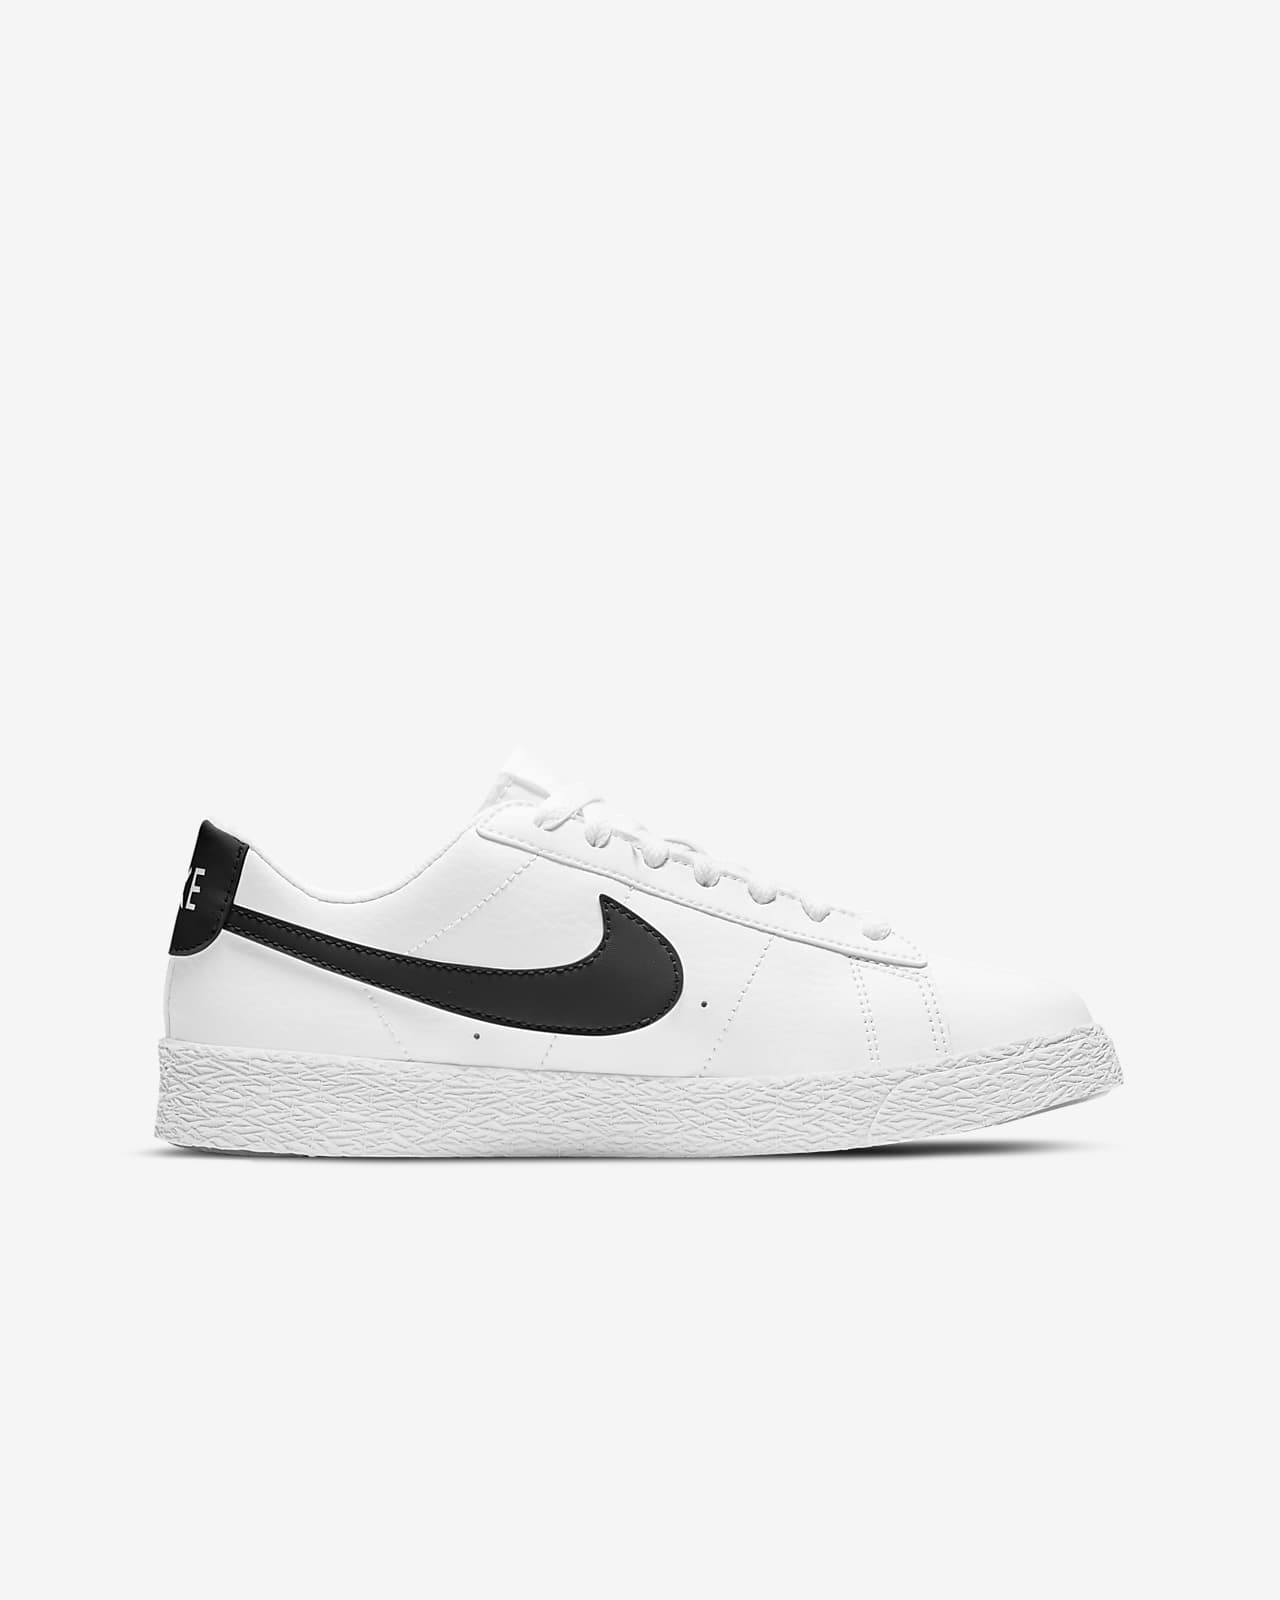 nike blazer sneakers in white and black